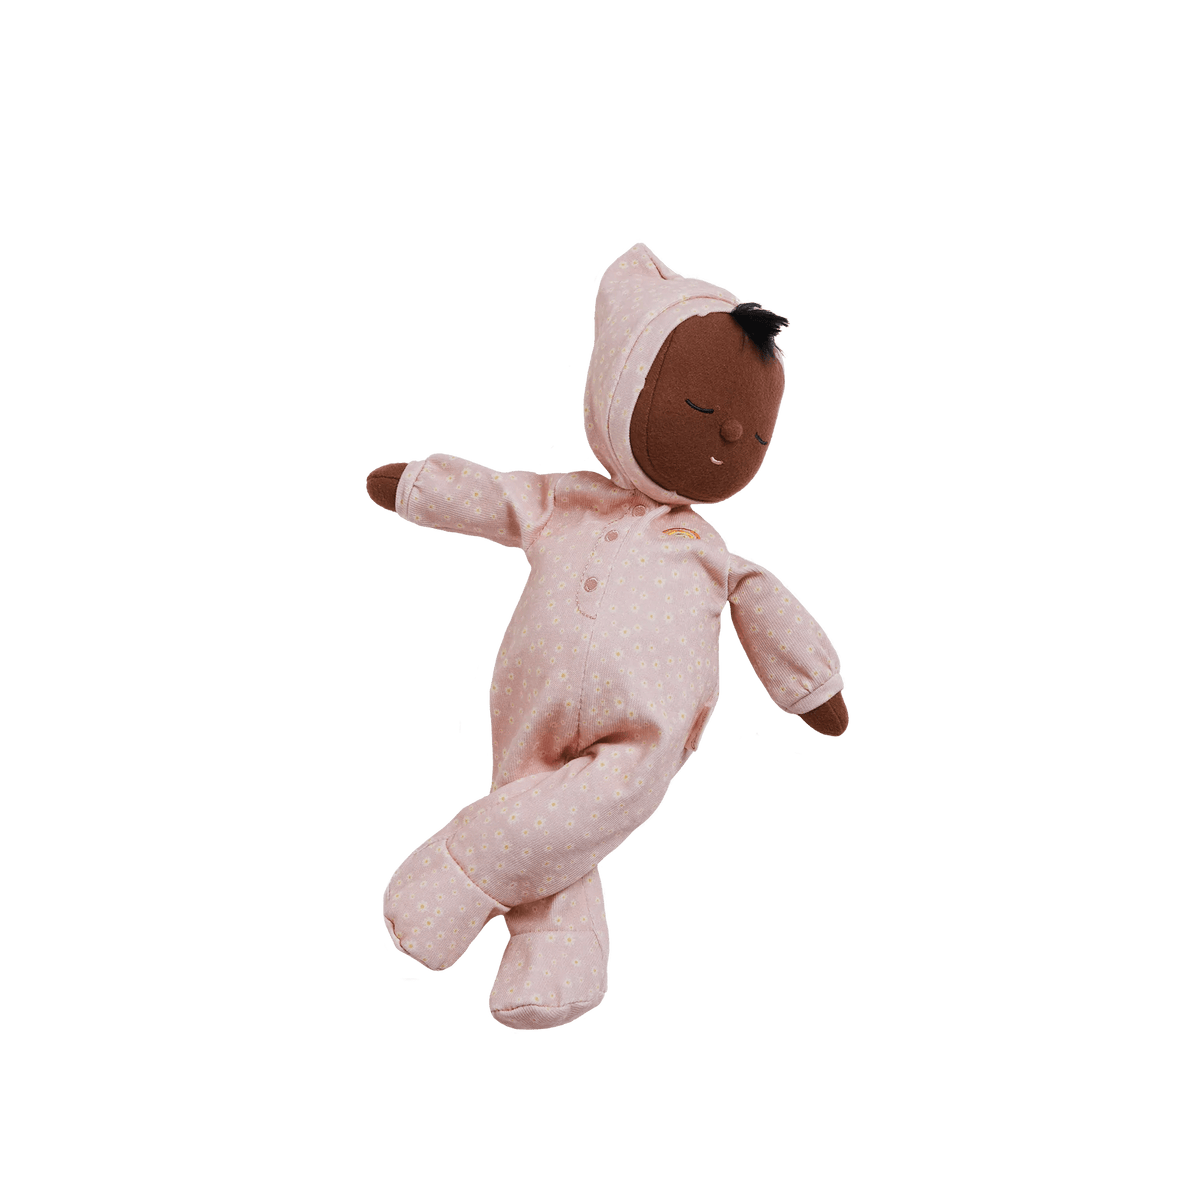 Daydream Dozy Dinkum Doll | Mini Daisy by Olliella - Maude Kids Decor